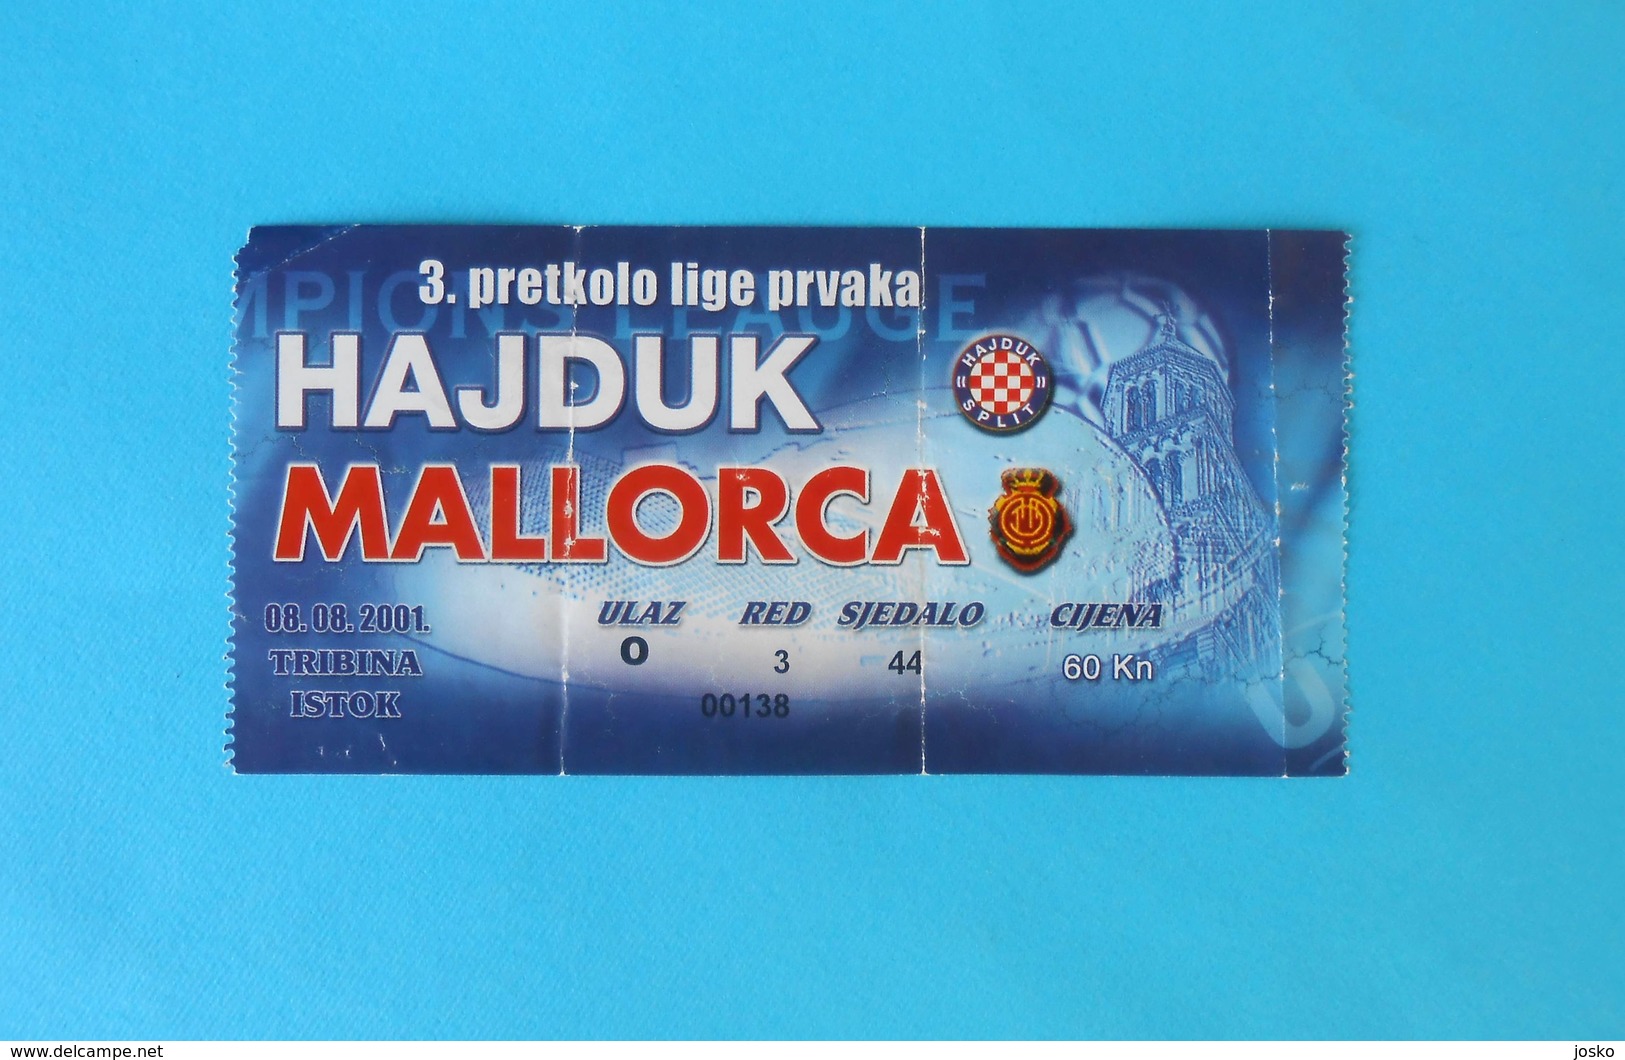 HAJDUK V MALLORCA - 2001.UEFA CHAMP. LEAGUE Qual. Football Match Ticket Billet Soccer Futbol Calcio Spain Espana Espanol - Match Tickets